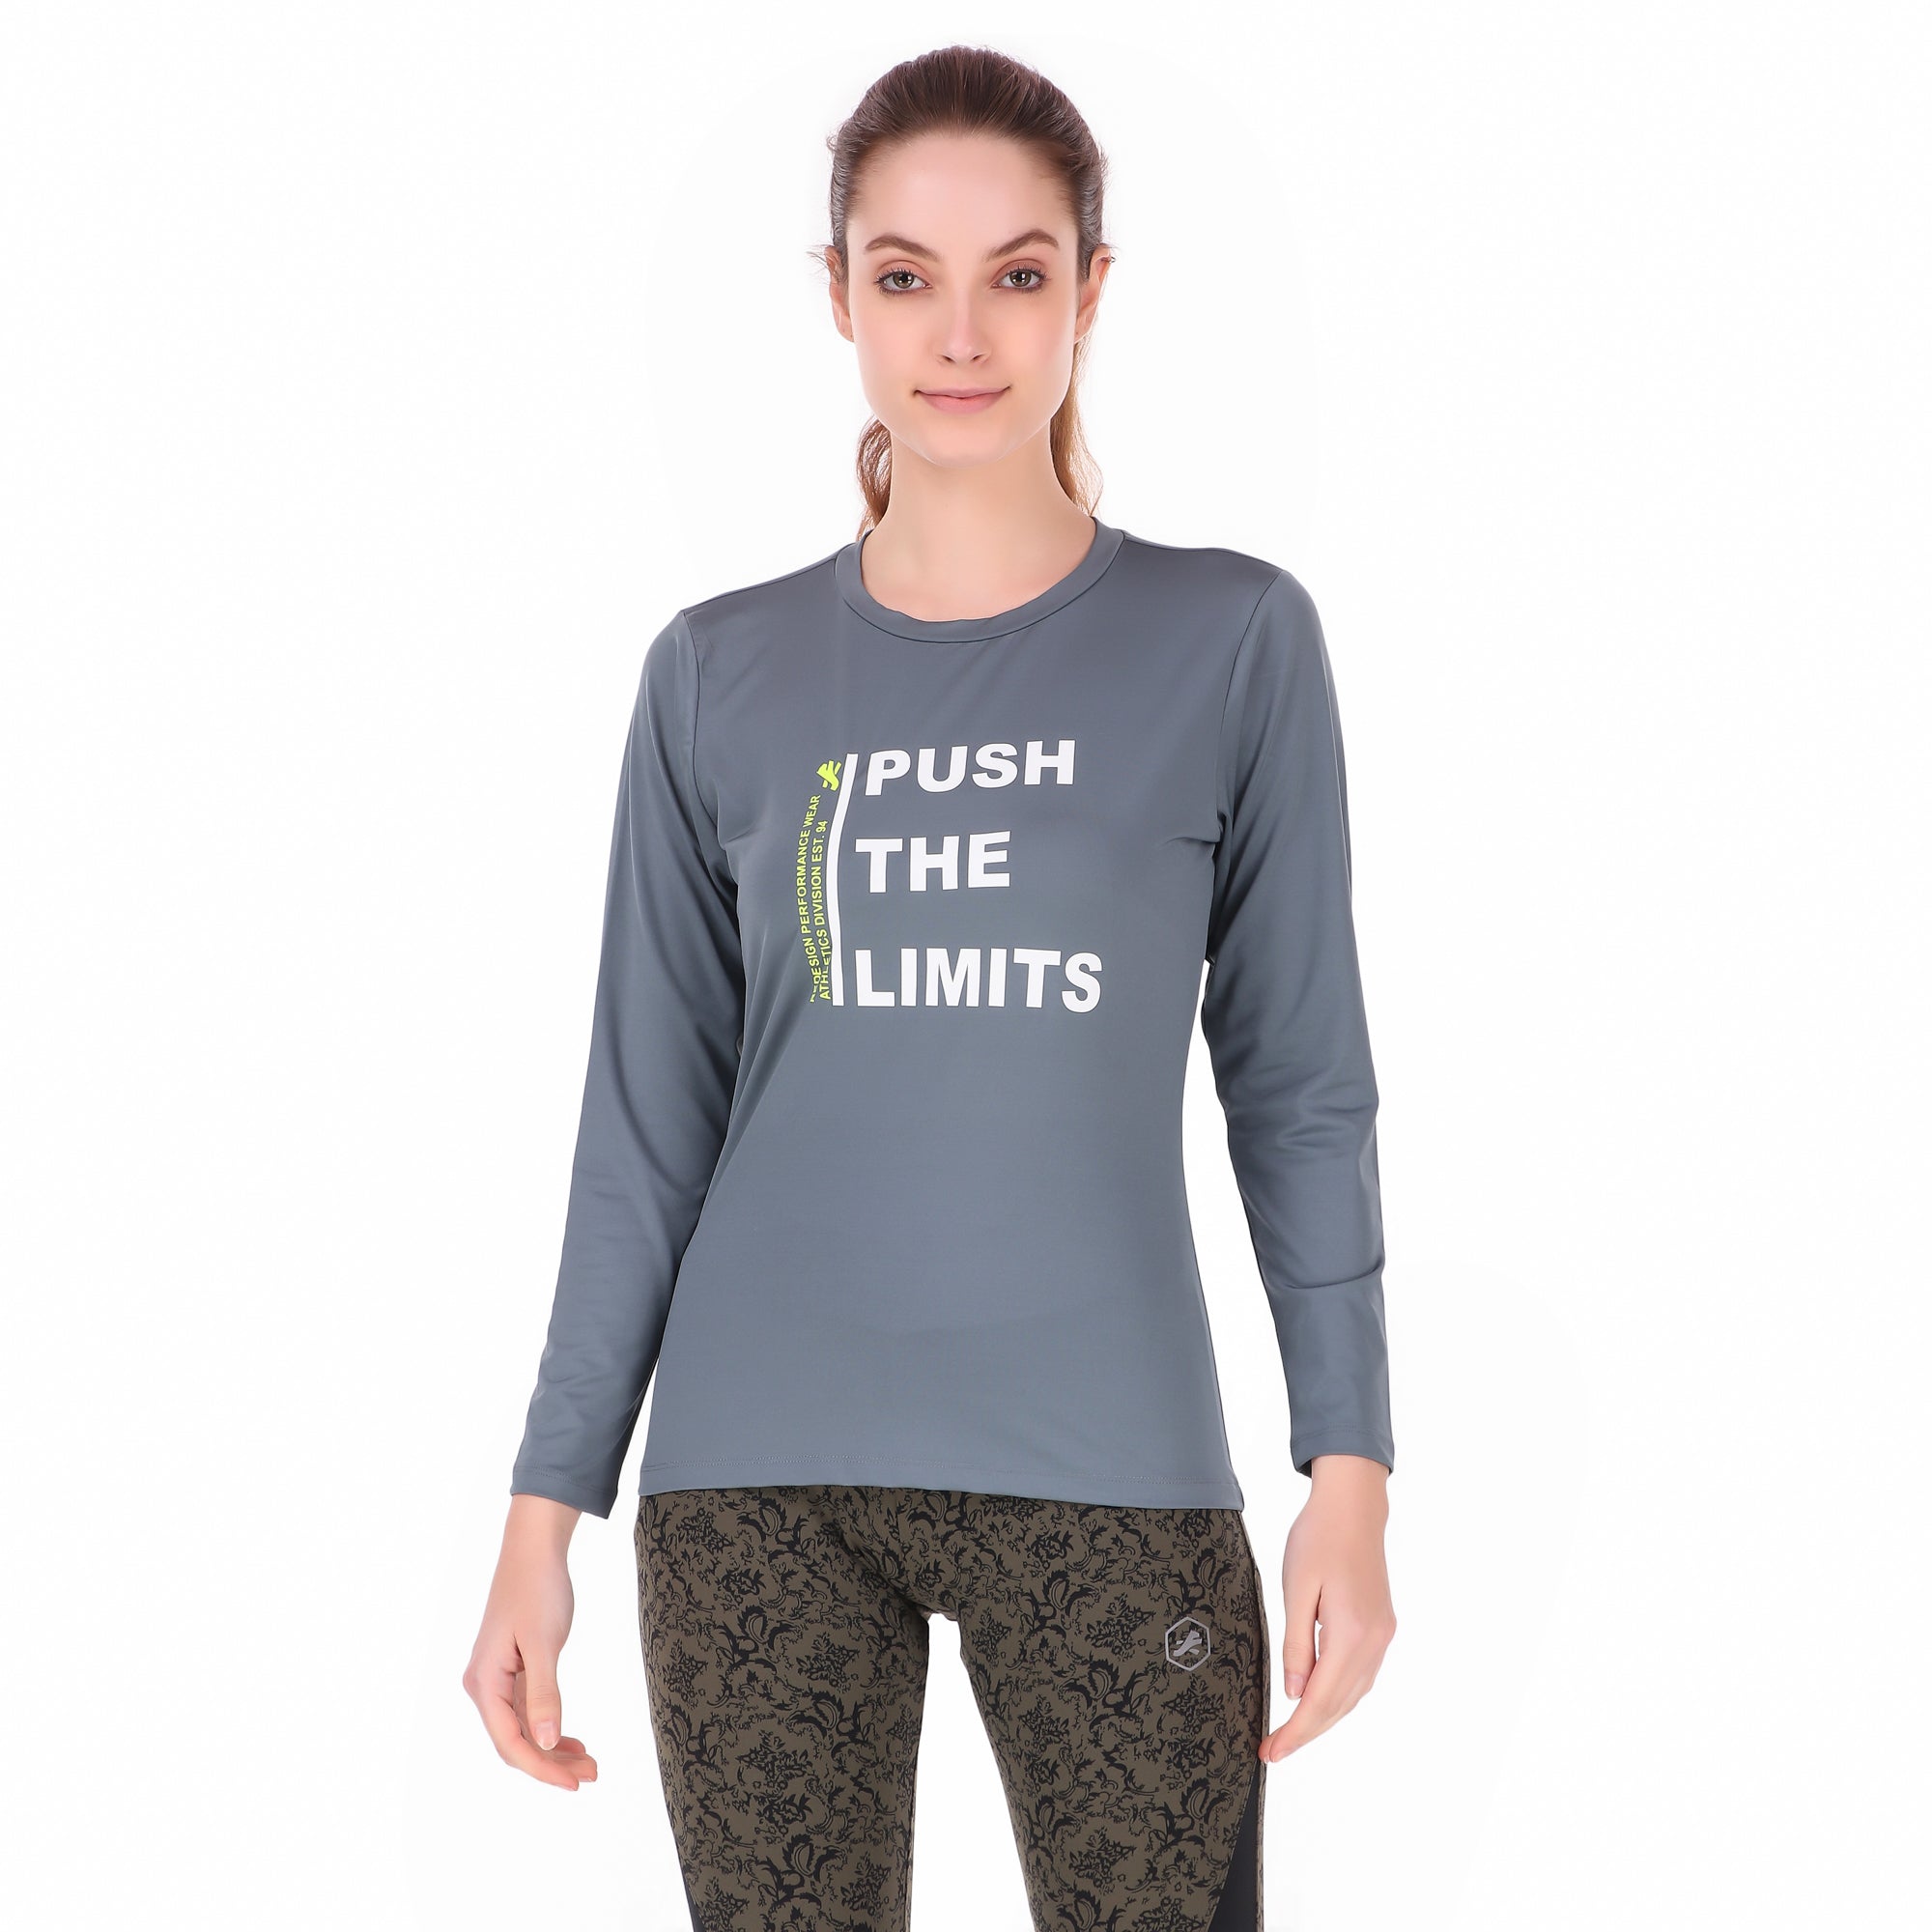 Push The Limits Tshirt For Women FS (Harbor Grey)